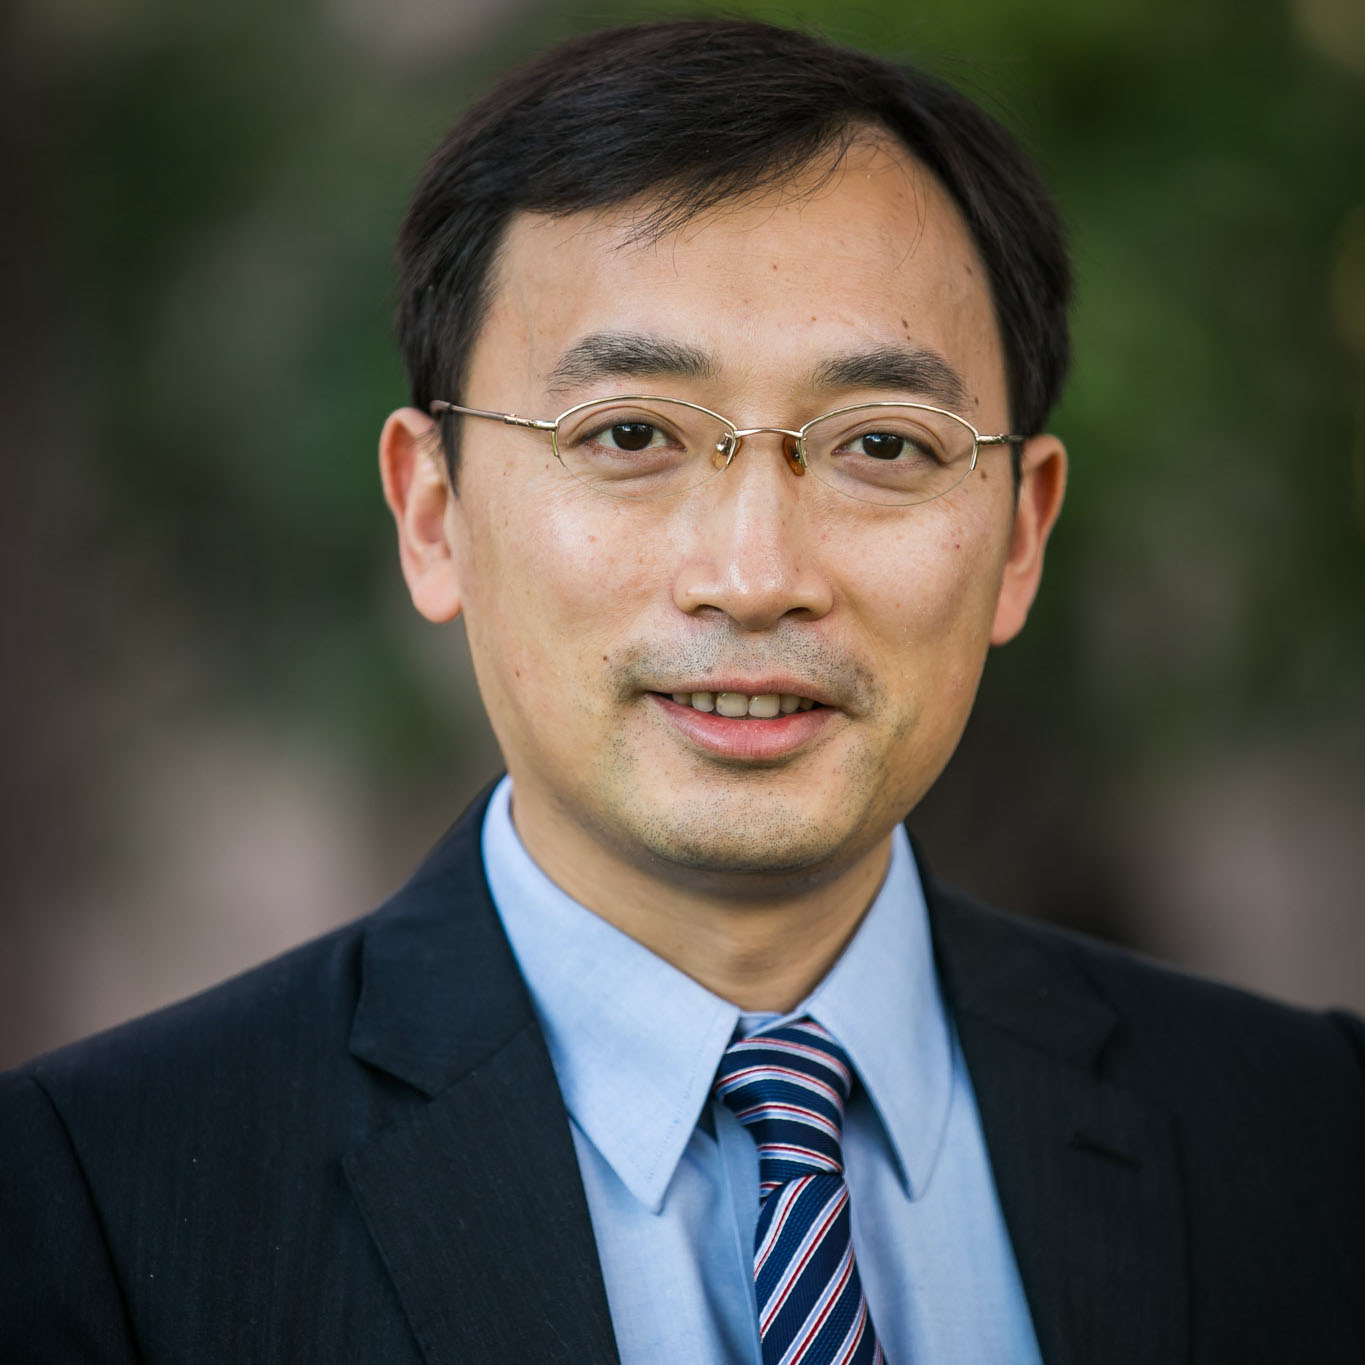 Professor Heng Wang, wearing black suit and a blue strip tie